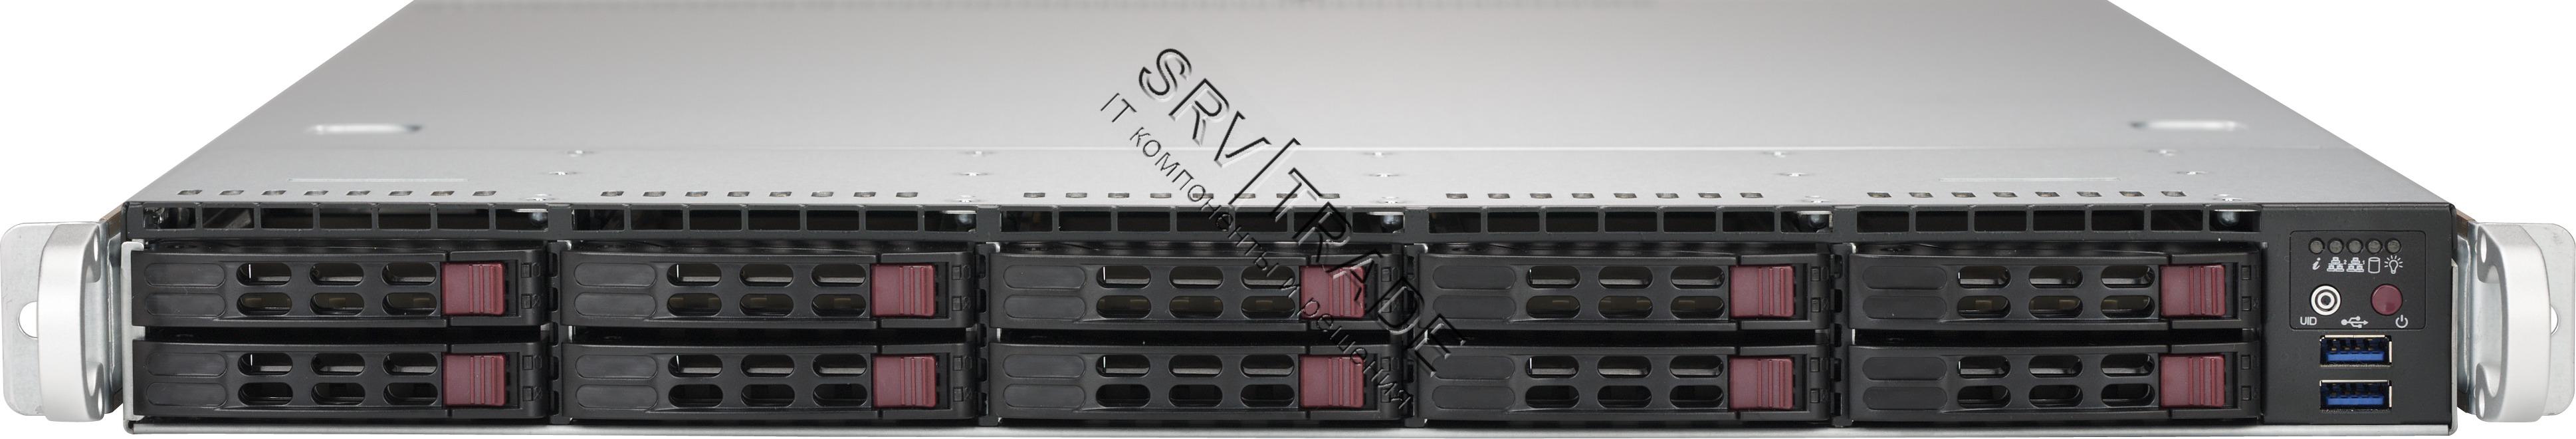 Серверная платформа Supermicro 1019P-WTR 1U